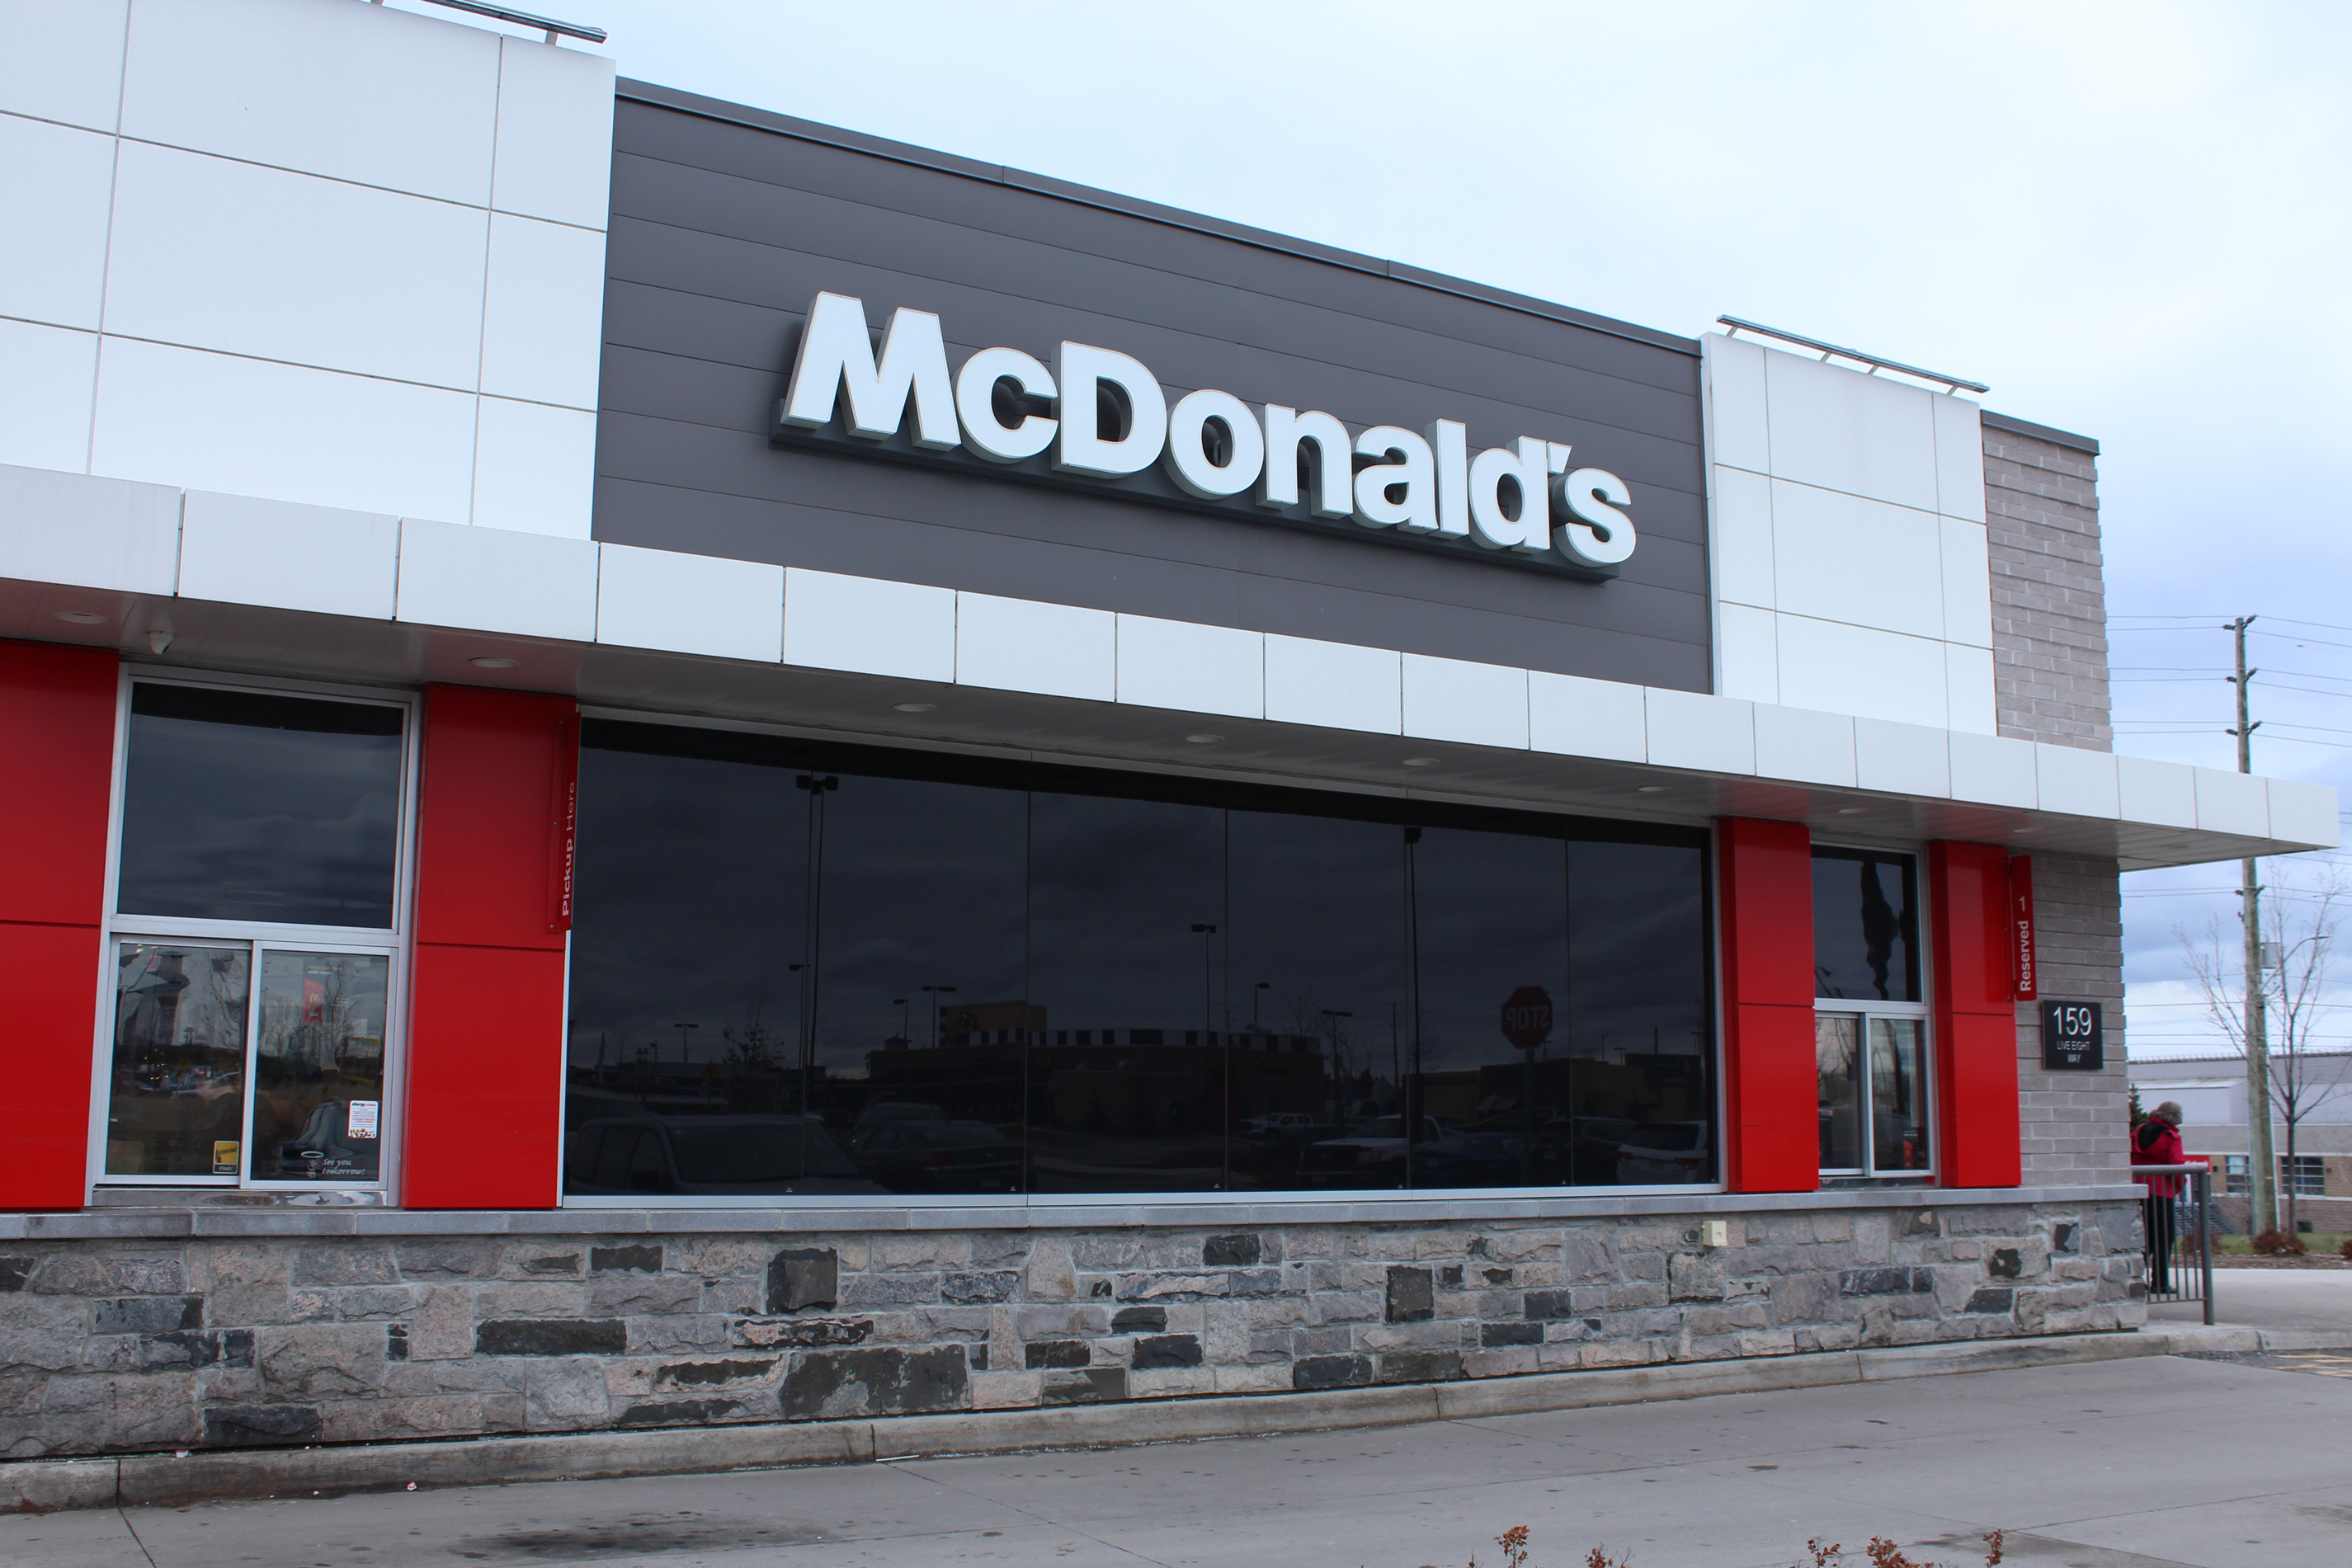 Drive-thru shot of McDonald's building and logo - Block colour Dover Grey / Diamond Black